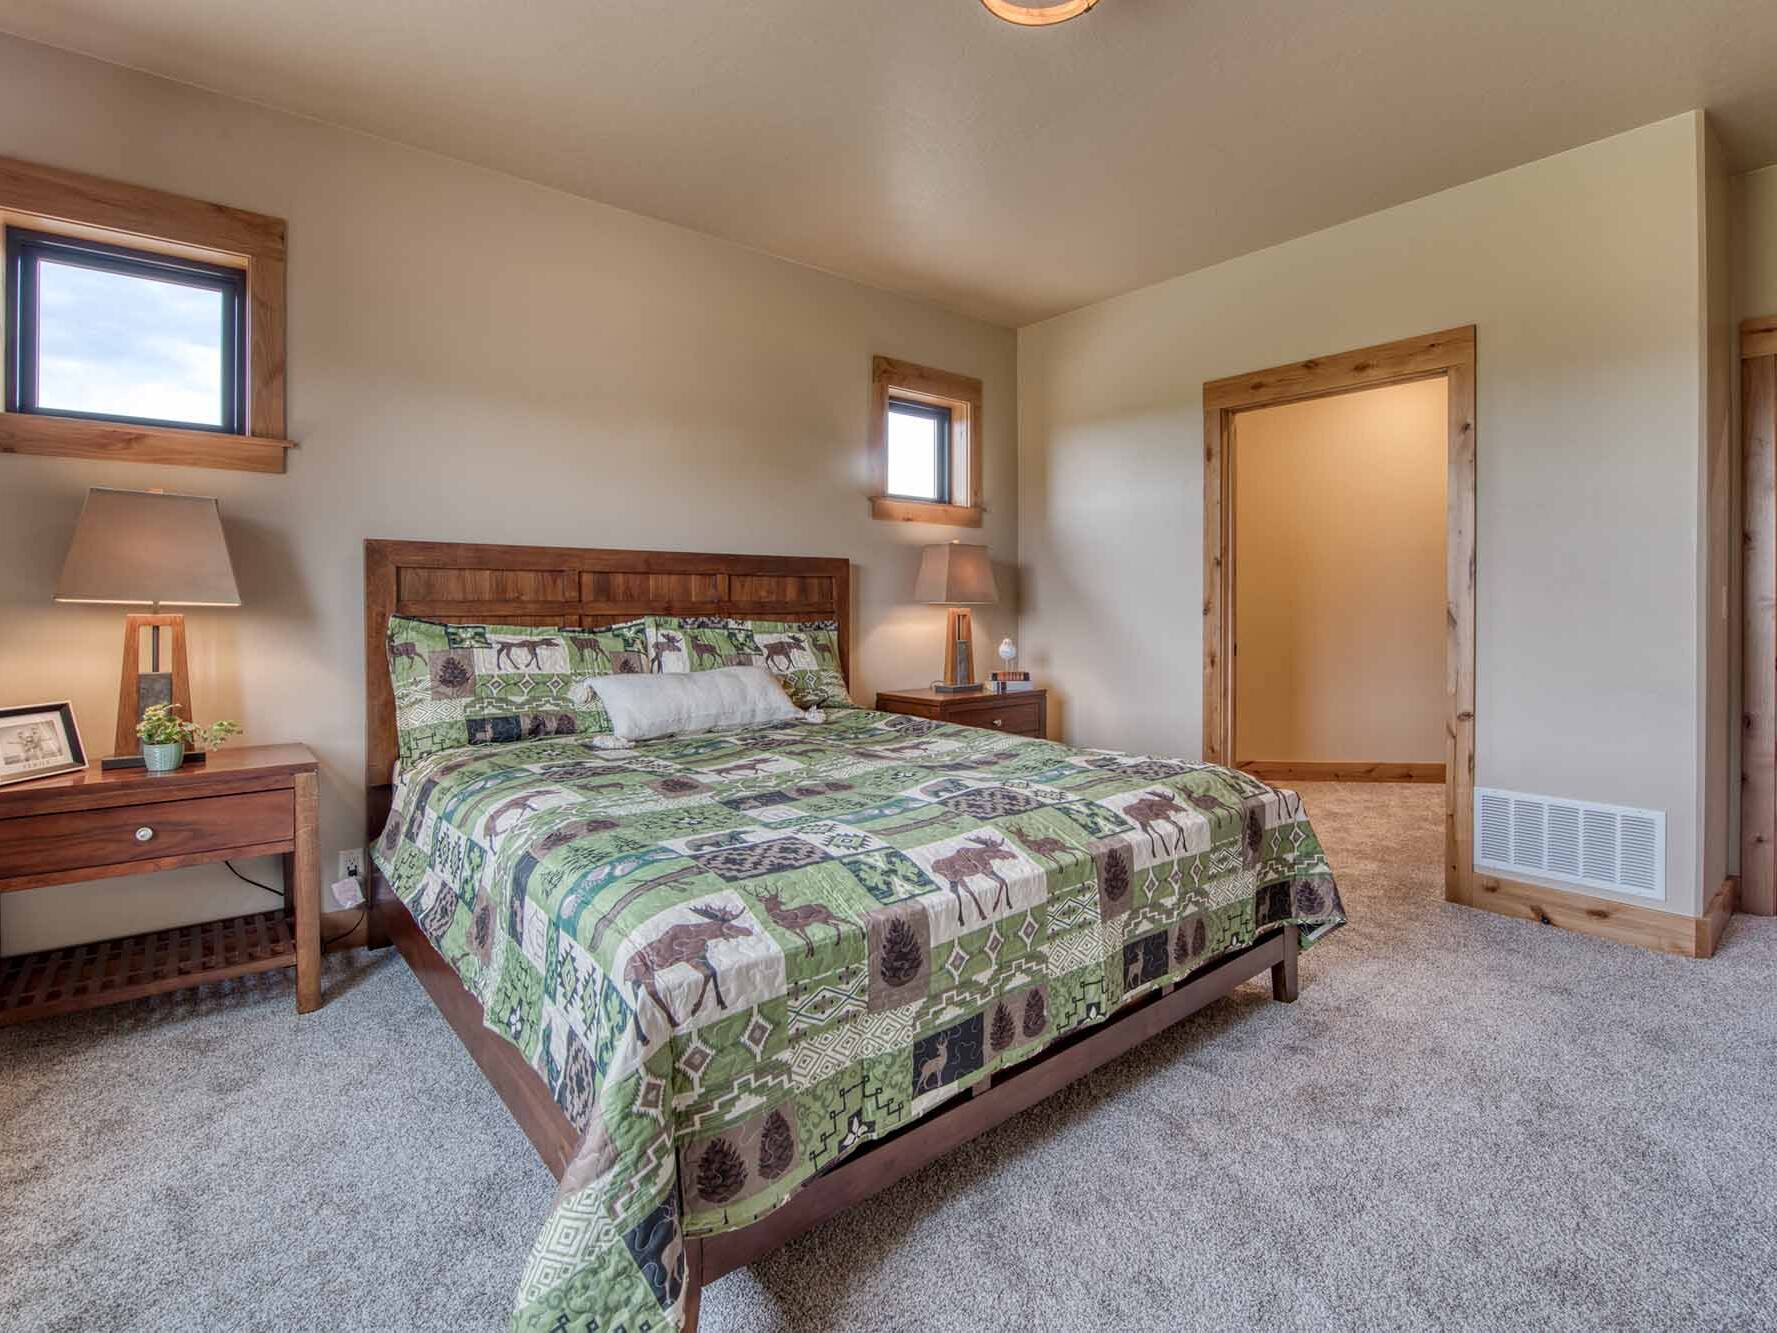 Master Bedroom in a custom home built by Big Sky Builders in Stevensville, MT